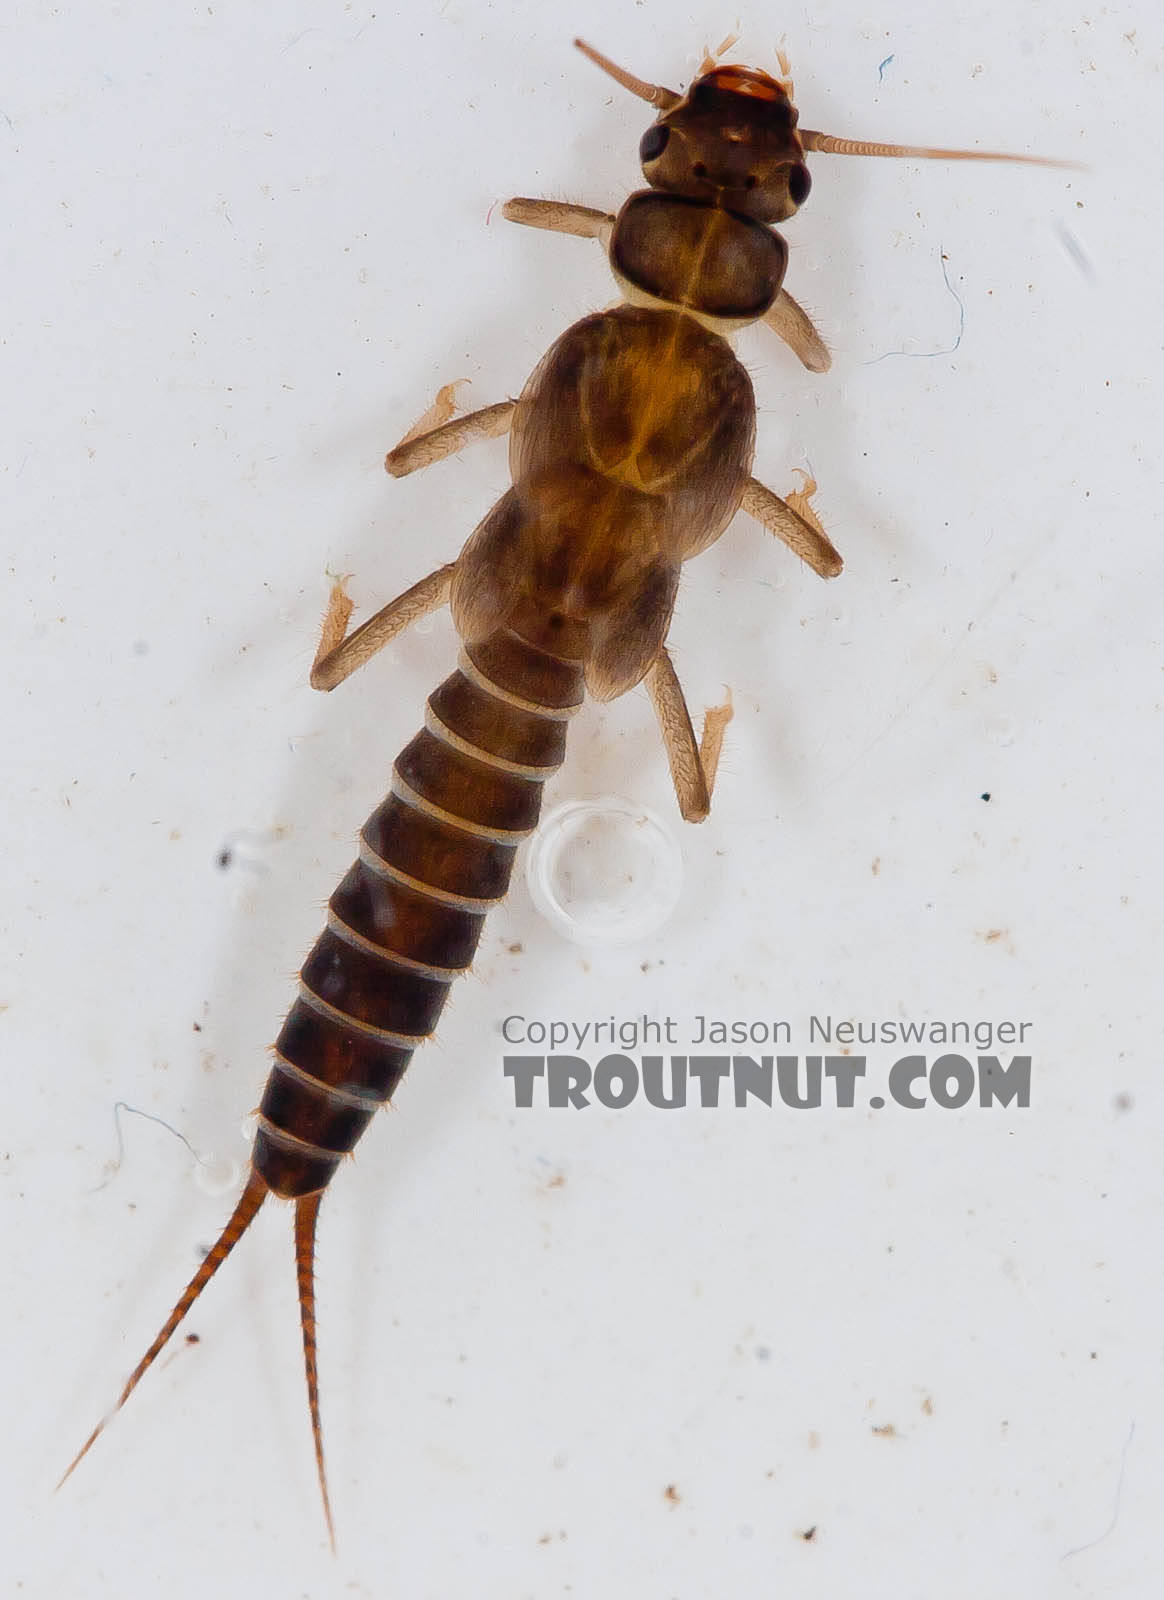 Chloroperlidae (Sallflies) Stonefly Nymph from the Chena River in Alaska